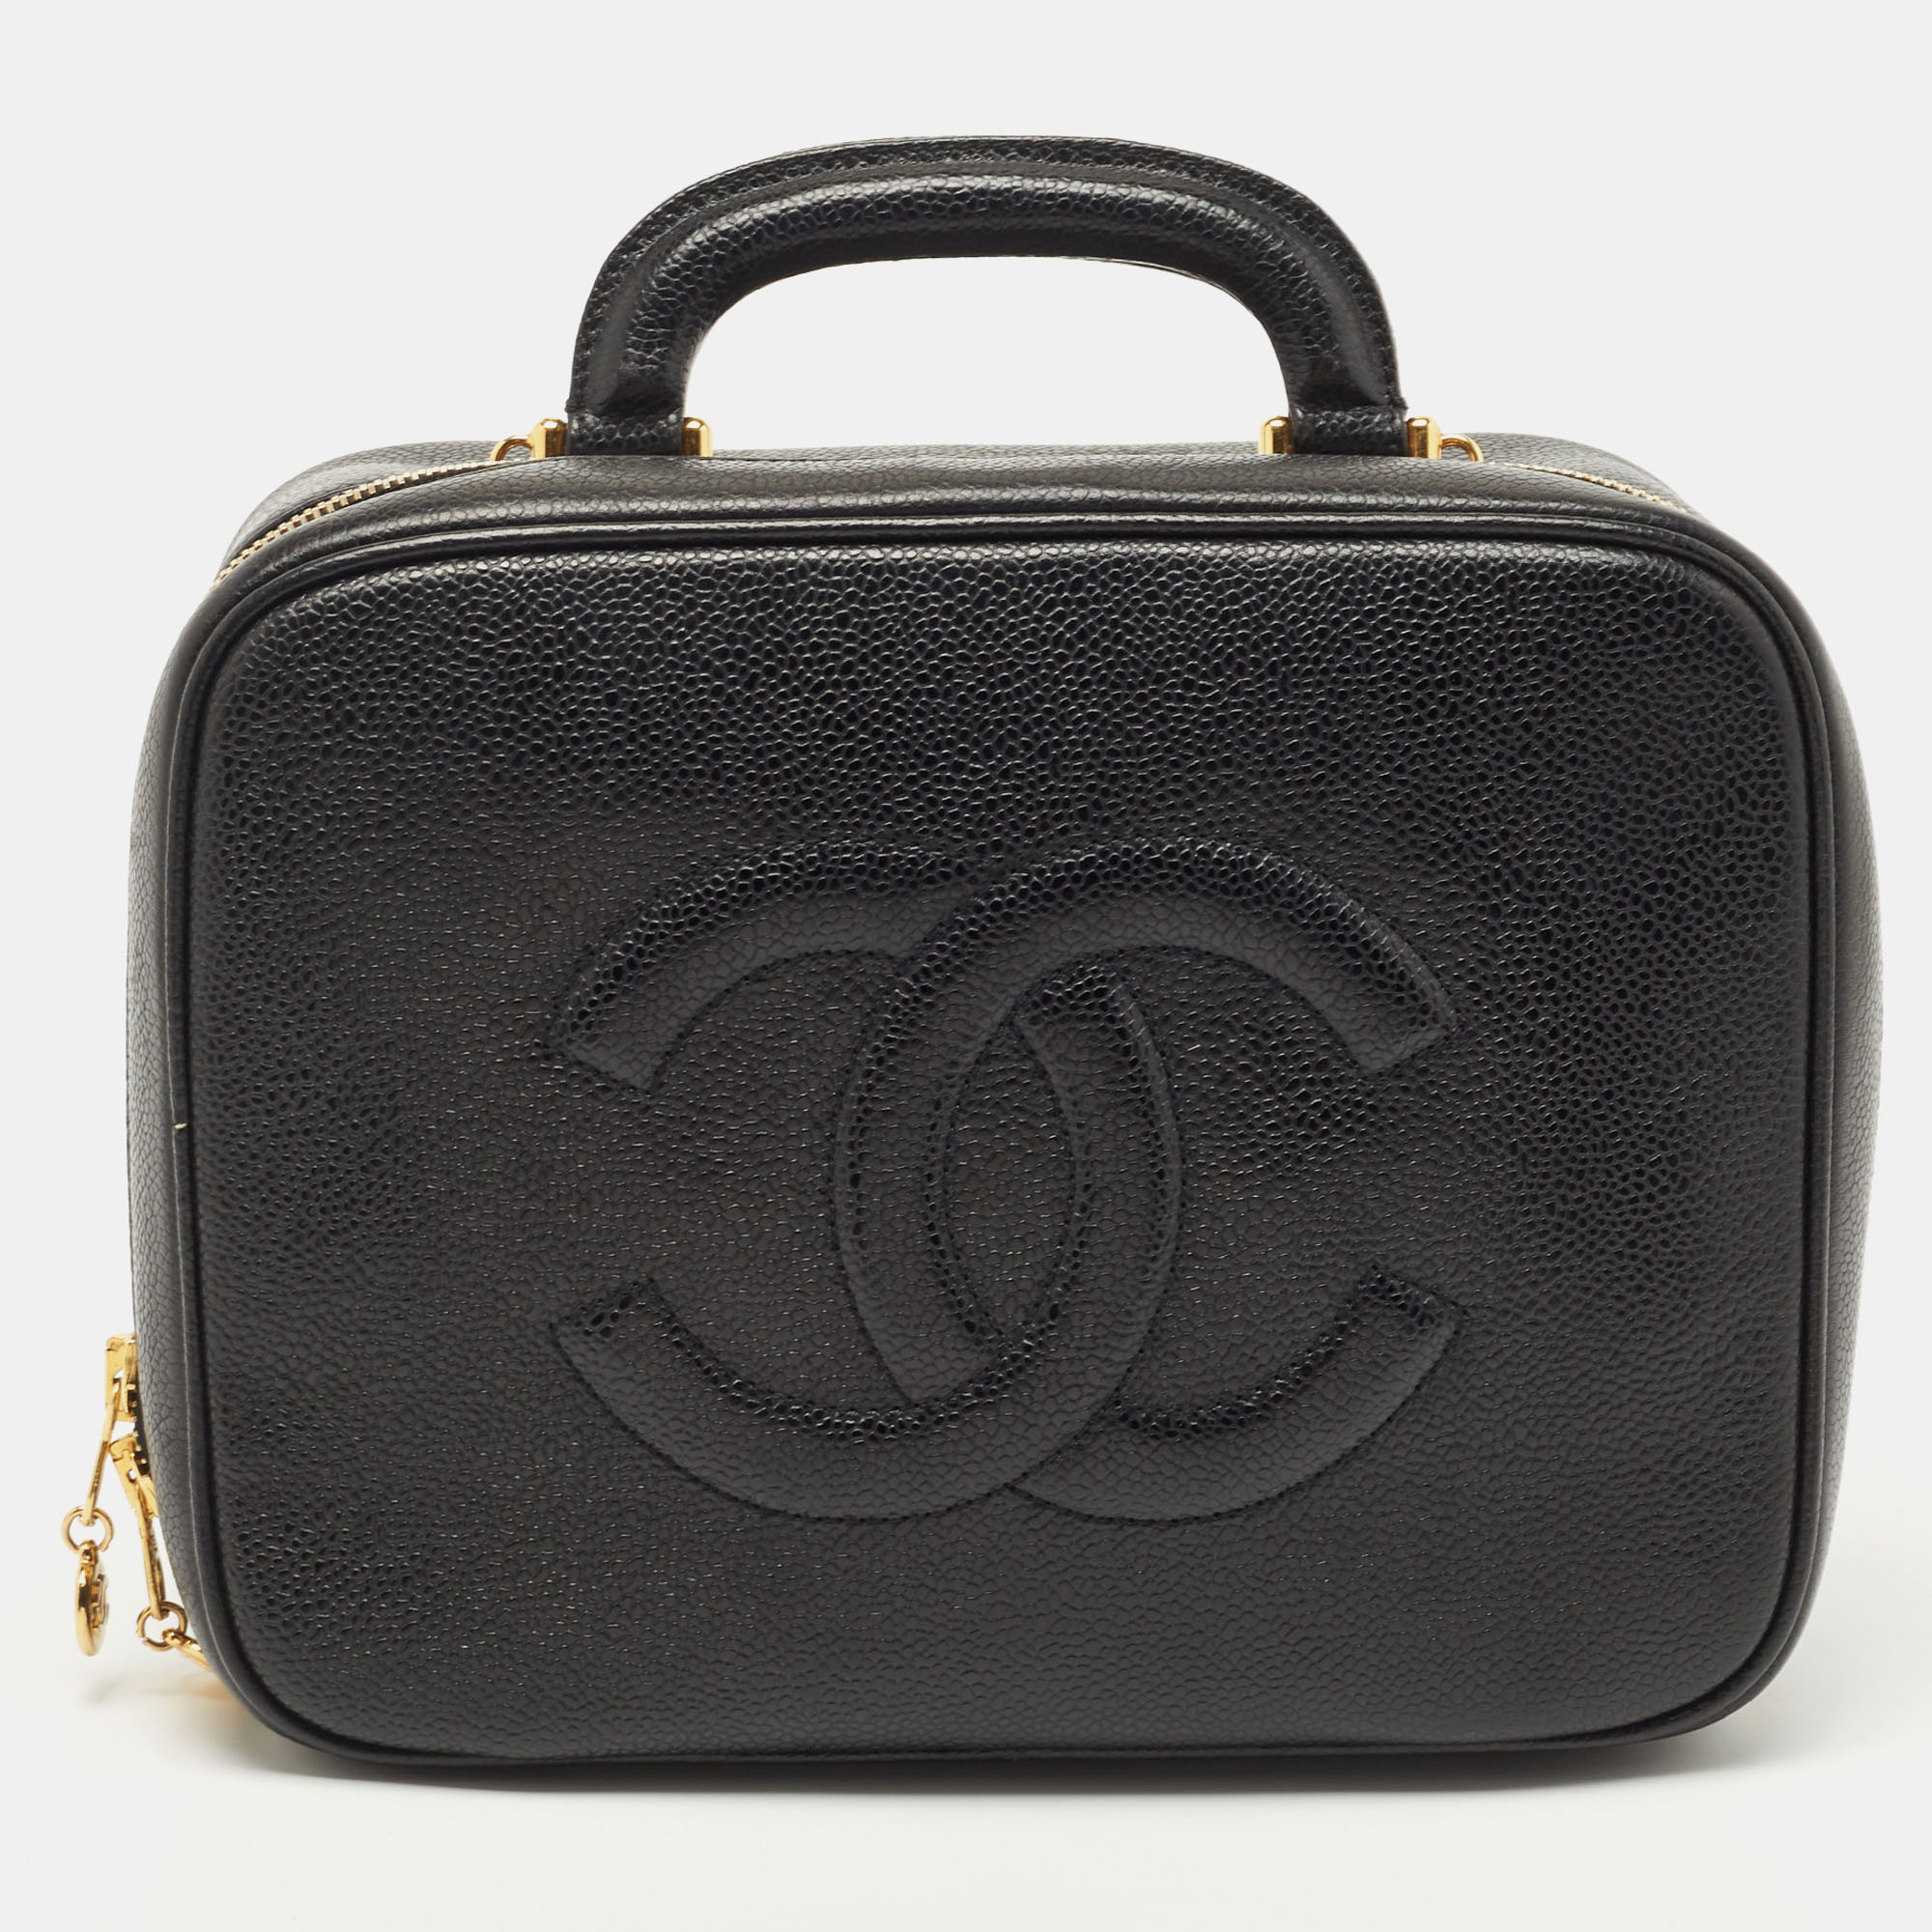 Chanel Black Caviar Leather Vintage CC Timeless Vanity Top Handle Bag